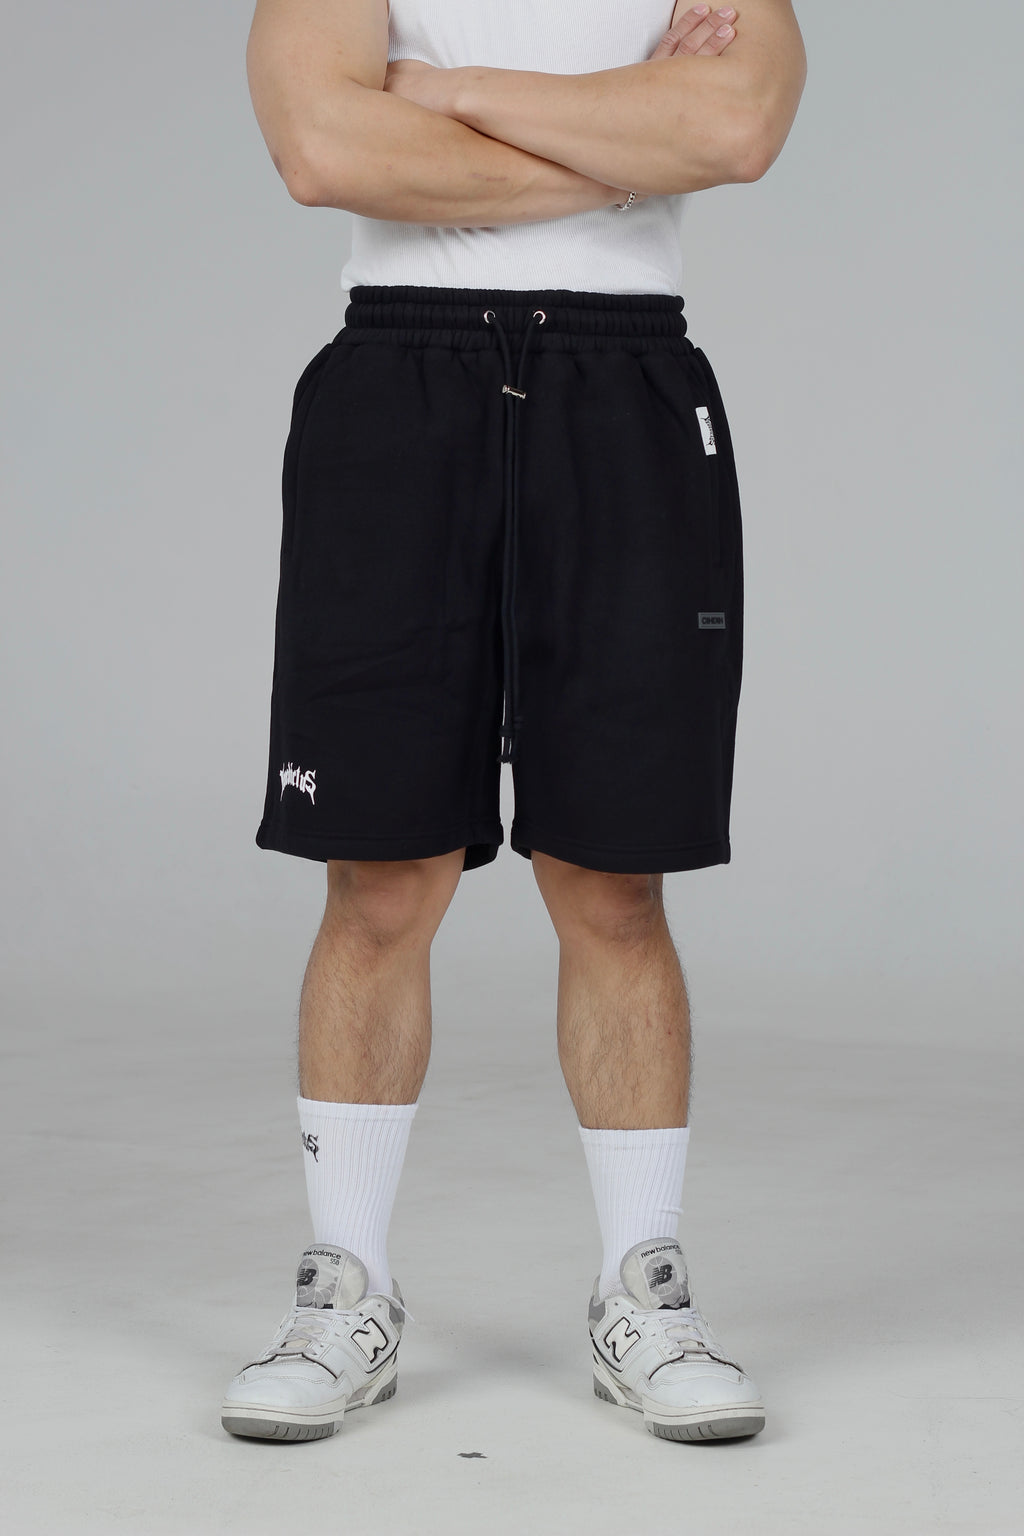 CIHDIH Shorts - Black